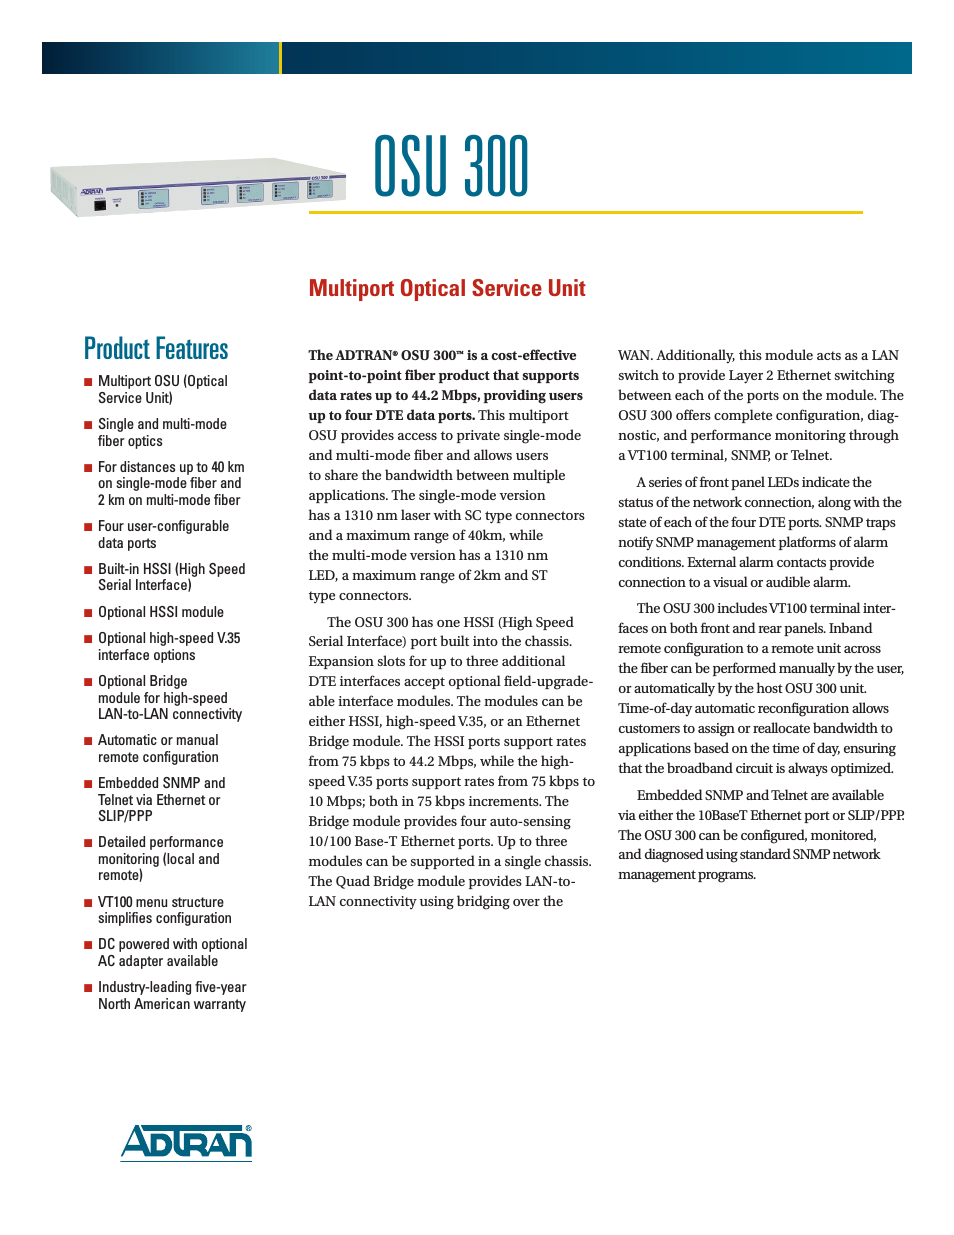 Multiport Optical Service Unit OSU 300